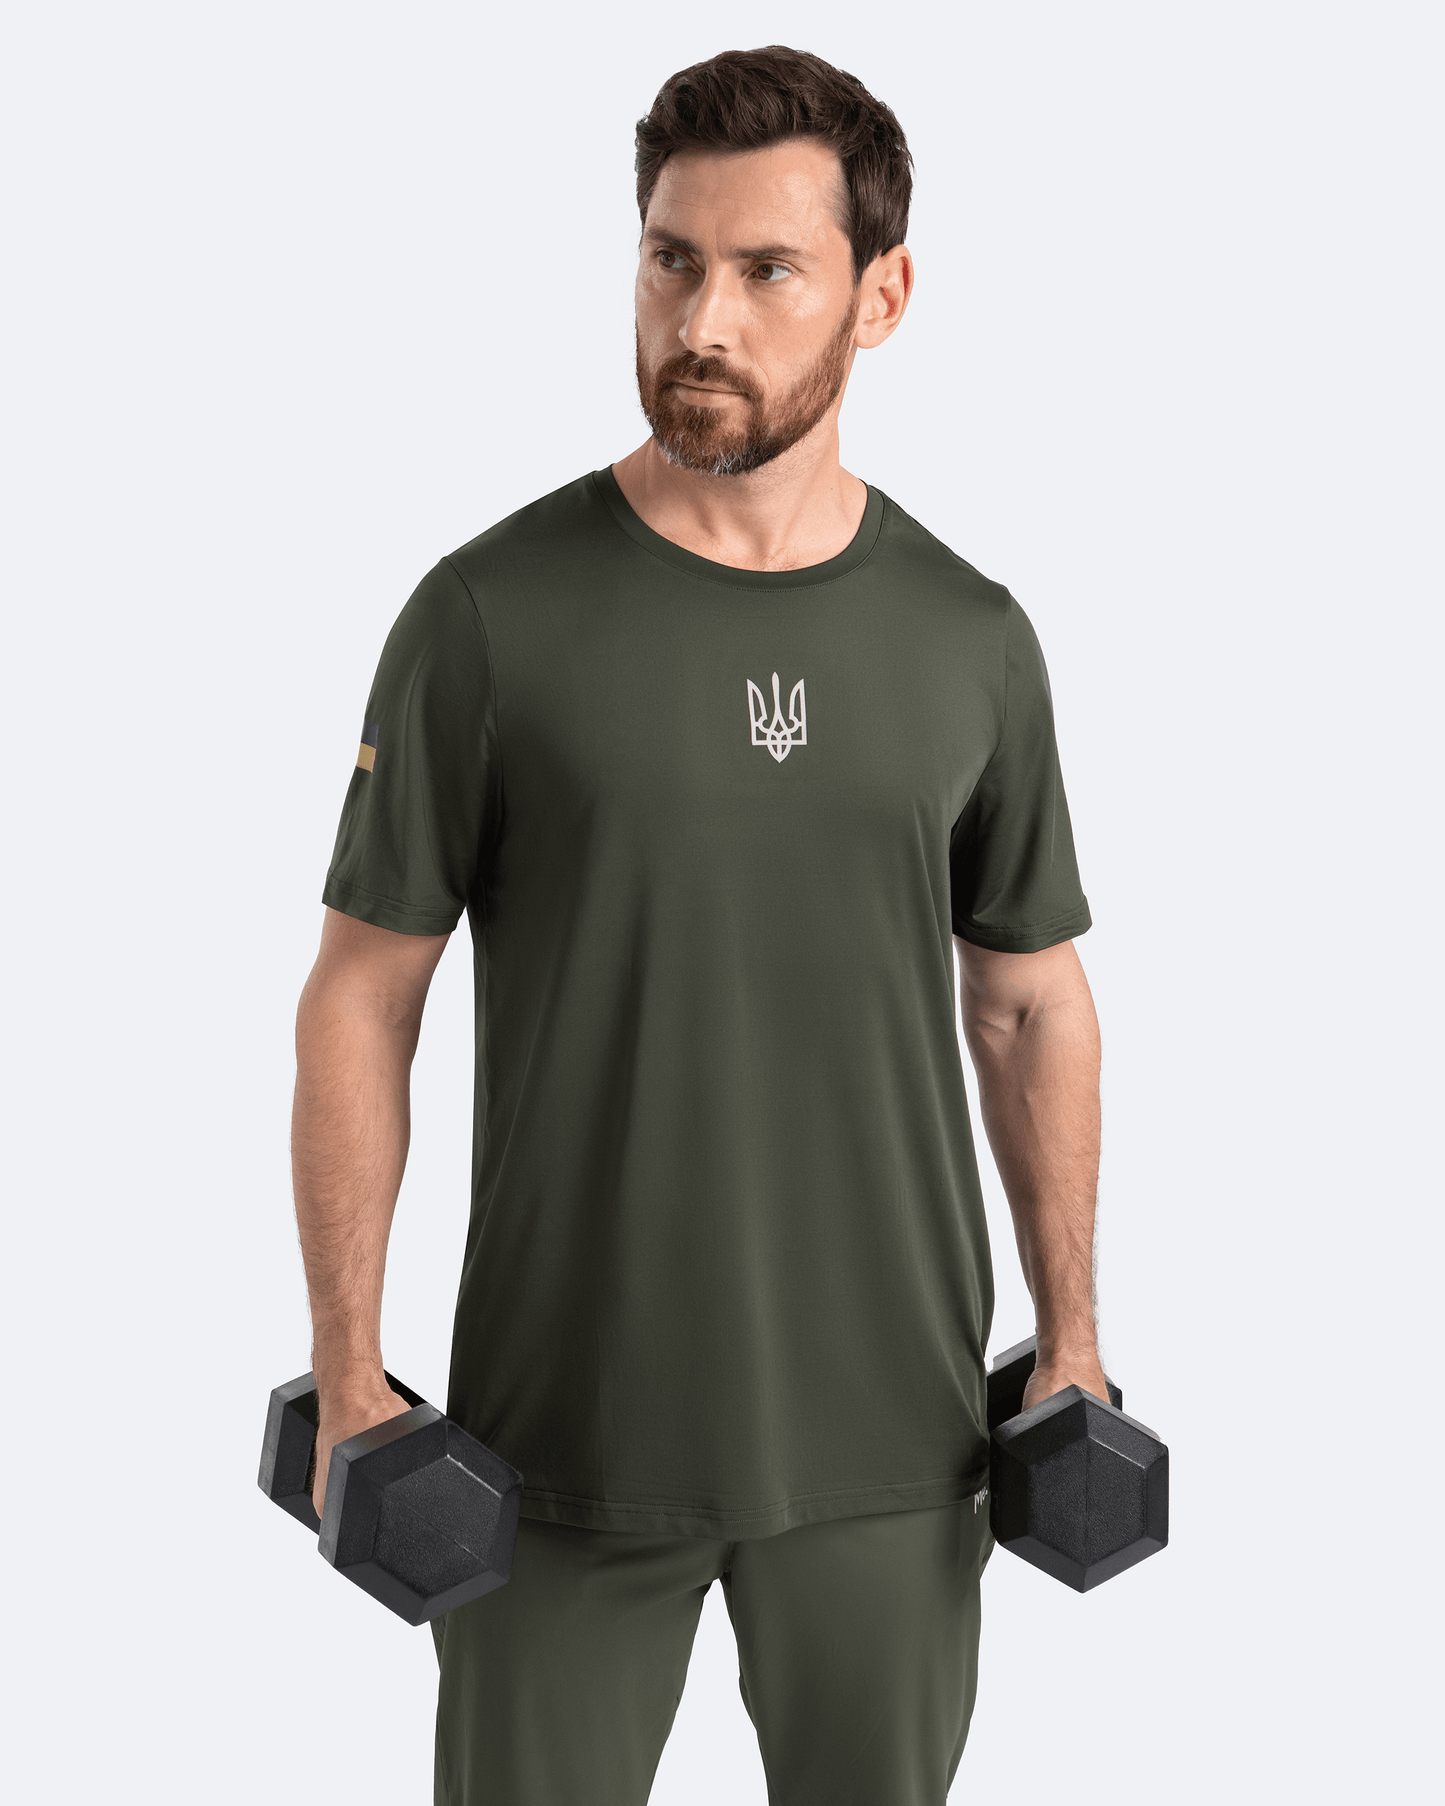 Khaki Green Matching Joggers & T-shirt set